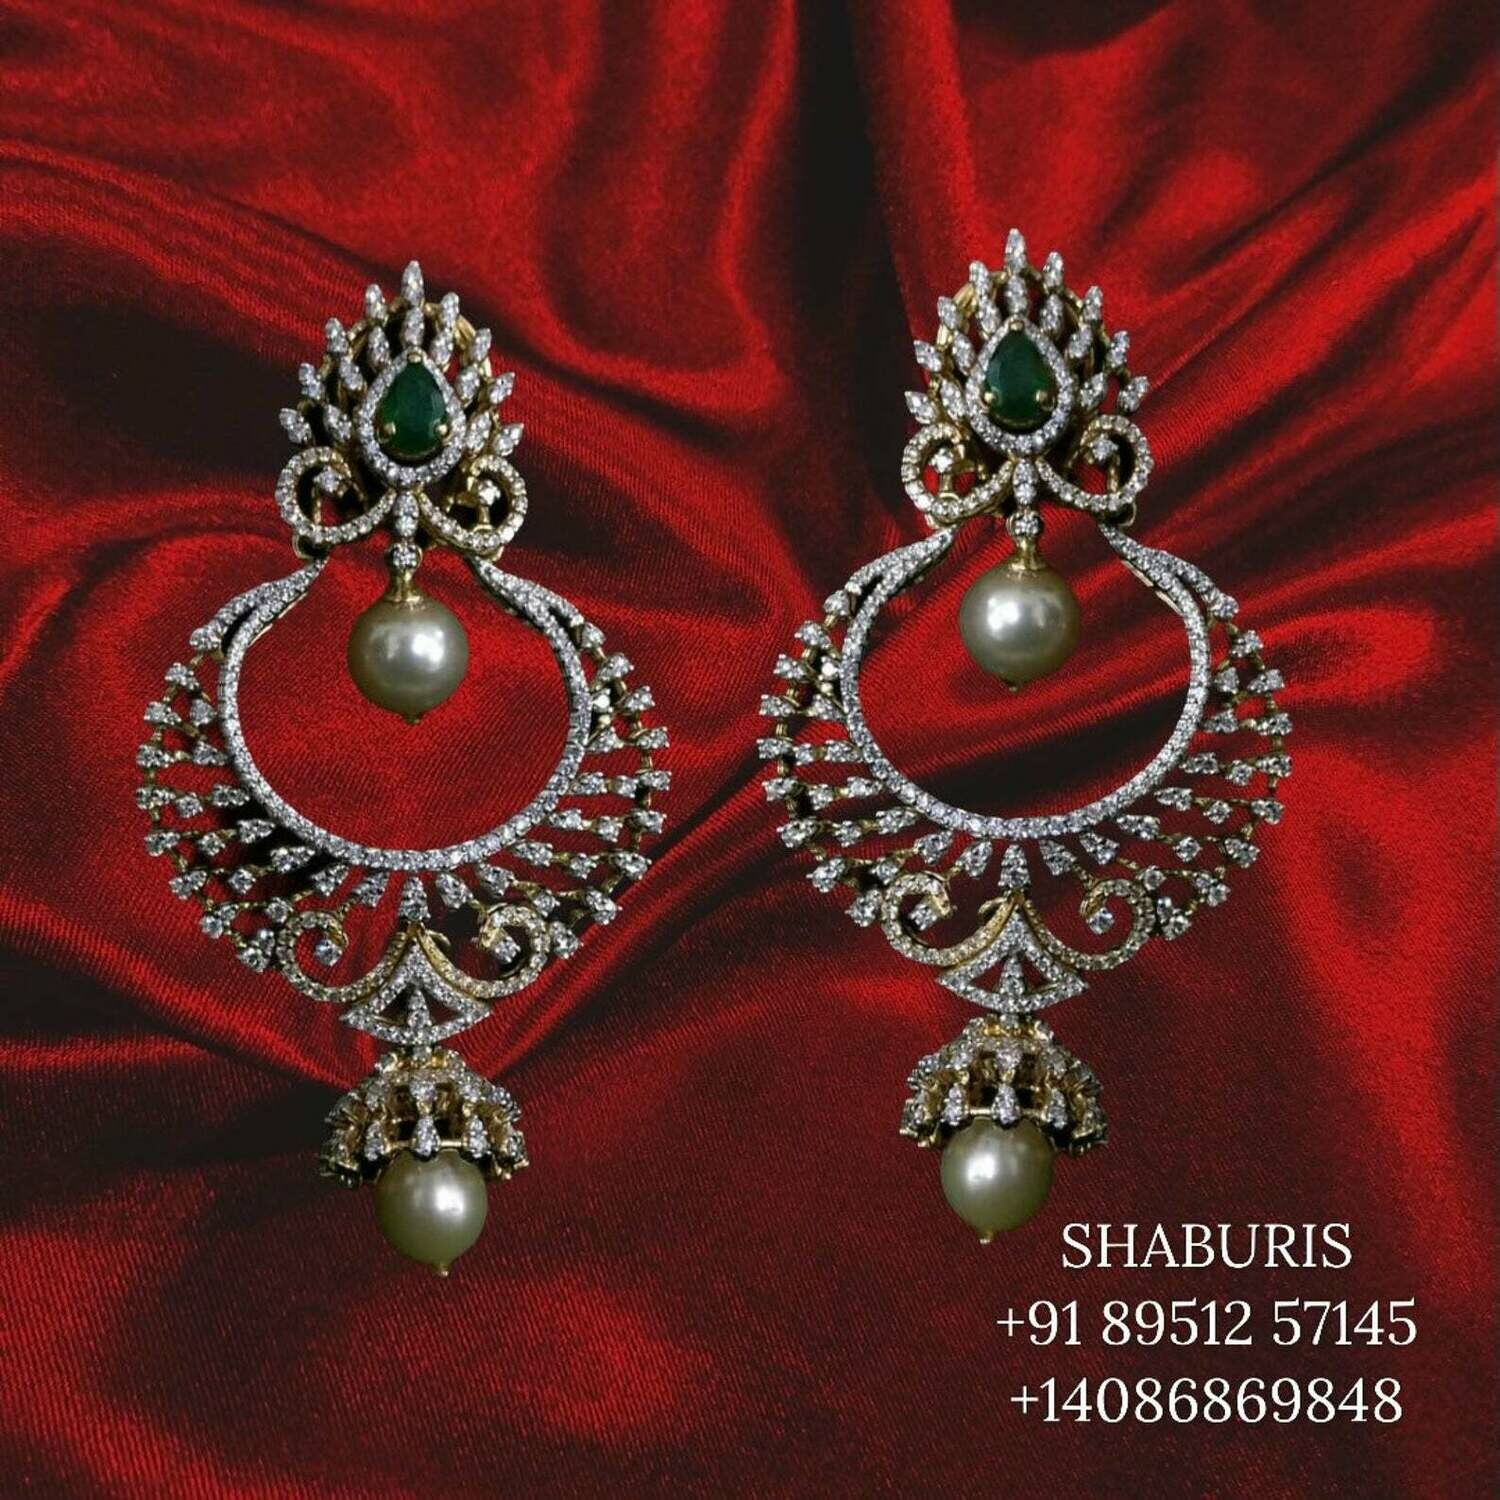 Indian Jewelry,Pure Silver Jewellery Indian ,diamond chandbali,Big Indian earrings,Indian gold Jewelry designs-SHABURIS